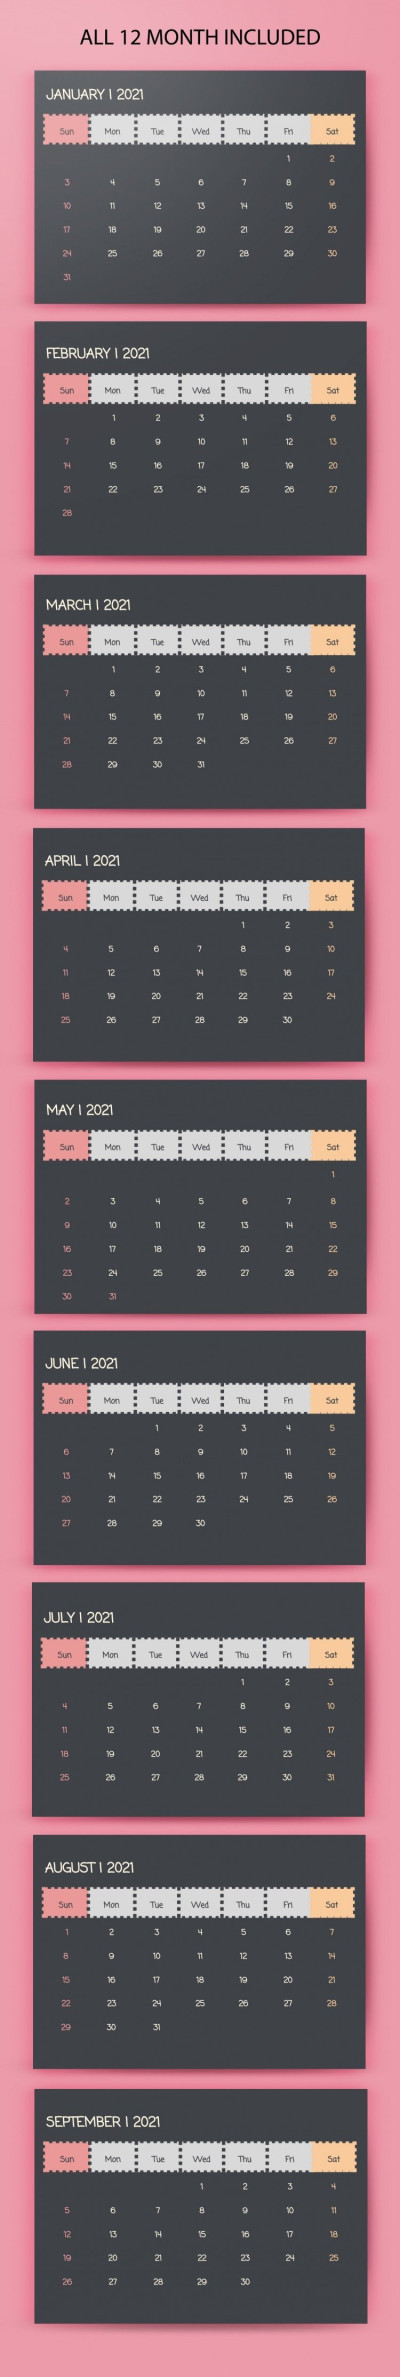 Yearly Desk Calendar 2021 Template